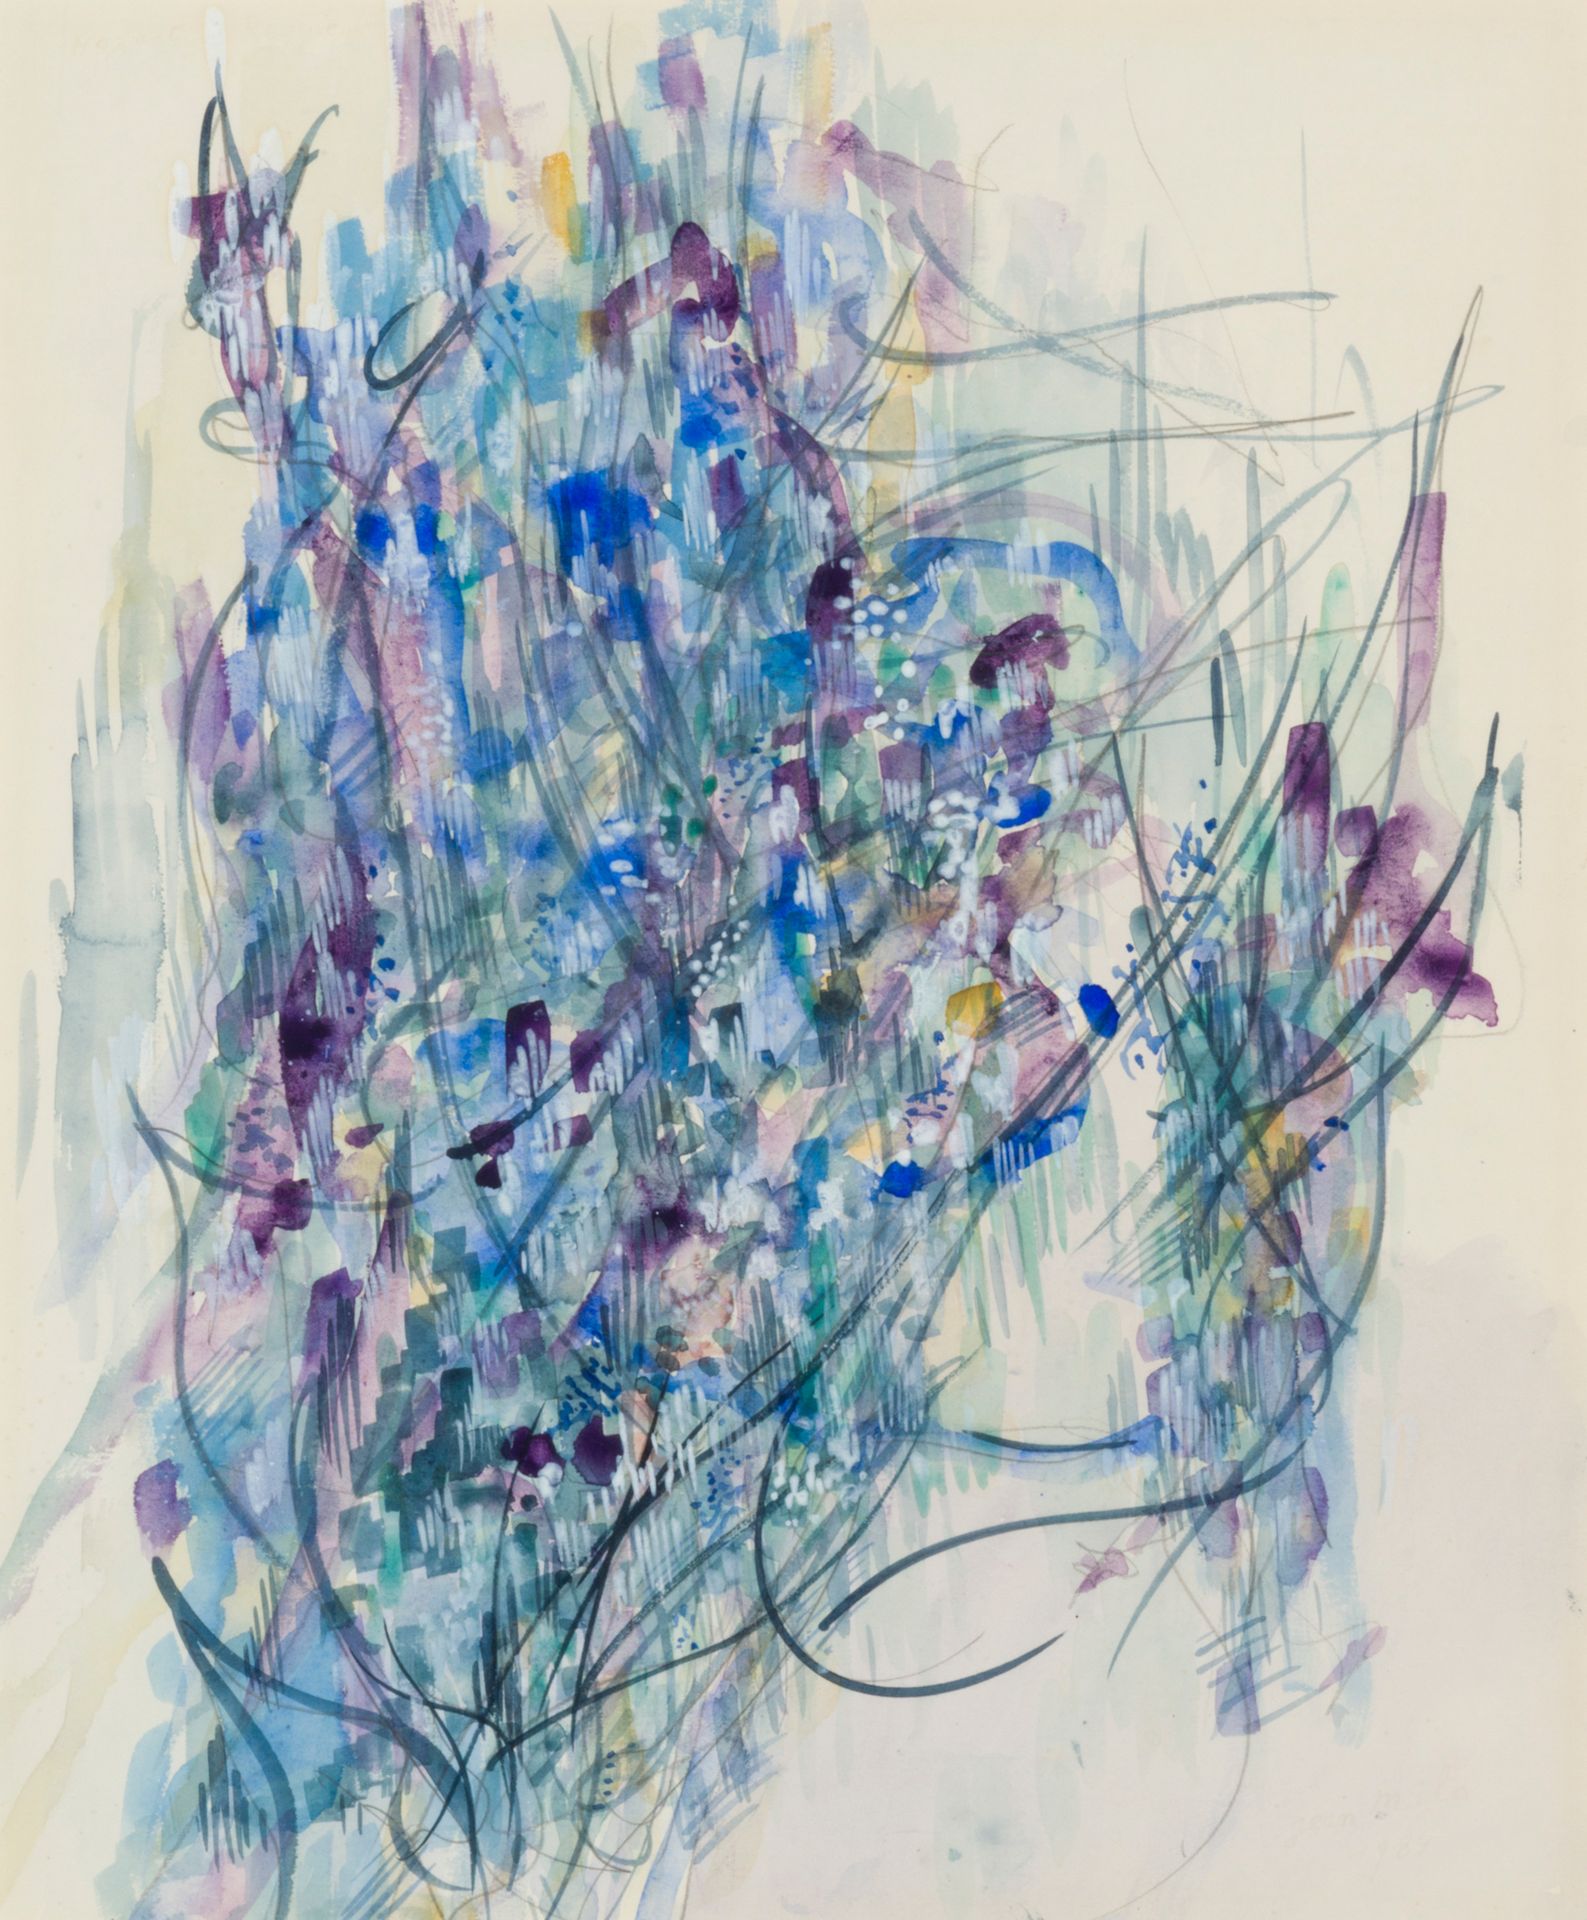 JEAN MILO (1906-93) 组成，1987年。
水粉画在纸上。
水粉画画纸。
39 x 45 x 39厘米

出处/Herkomst:
私人收藏/P&hellip;